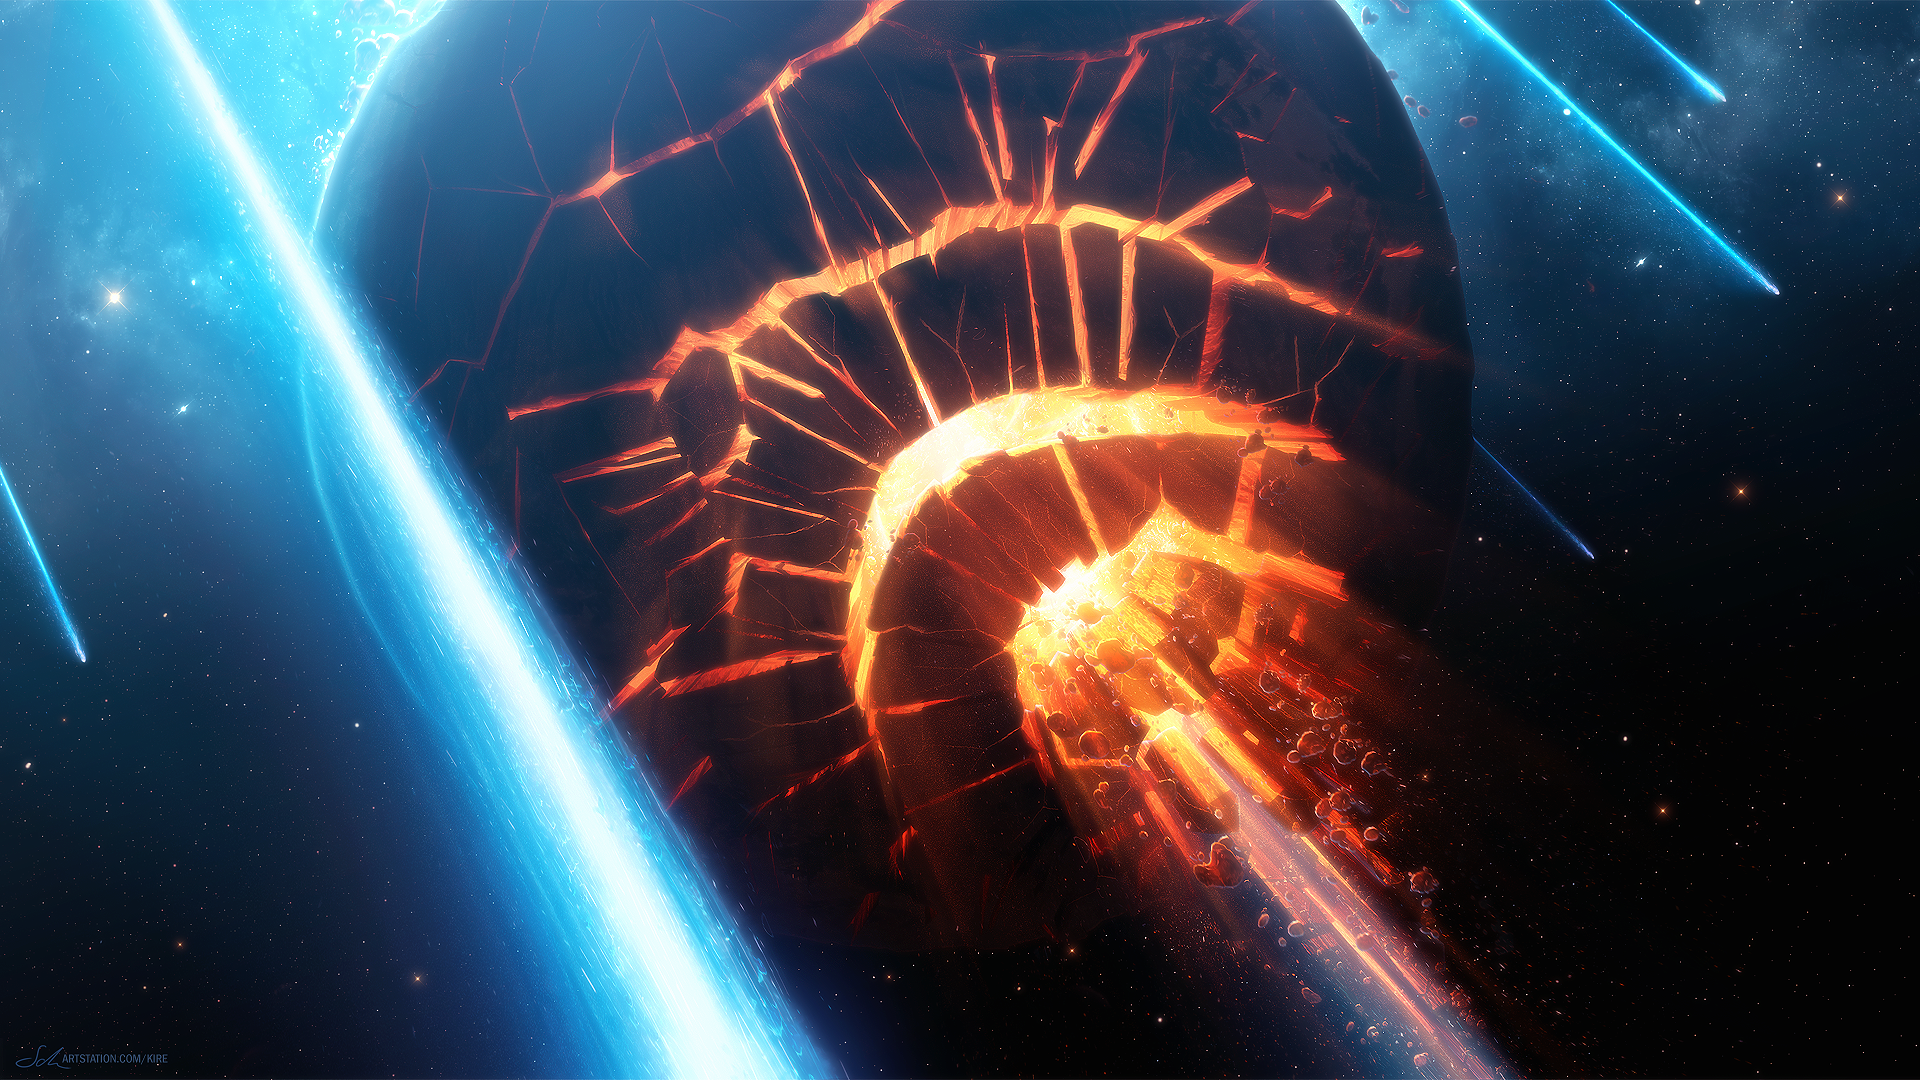 General 1920x1080 Erik Shoemaker digital art artwork planet space explosion destruction fire stars